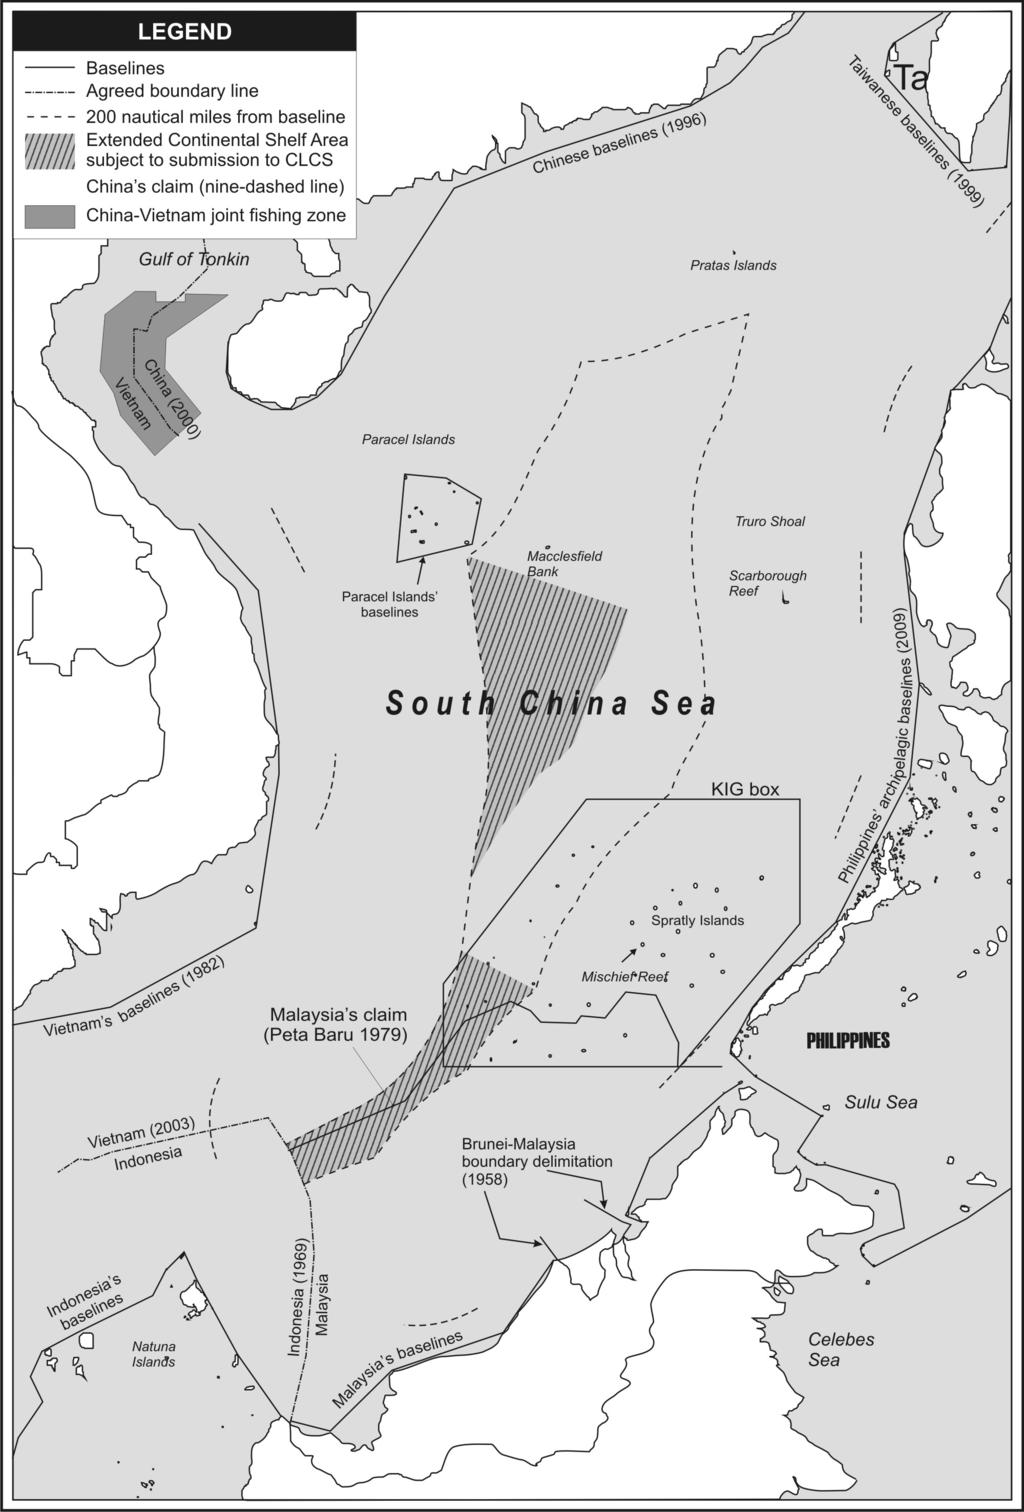 South China Sea Source: Andi Arsana and Clive Schofield, Australian National